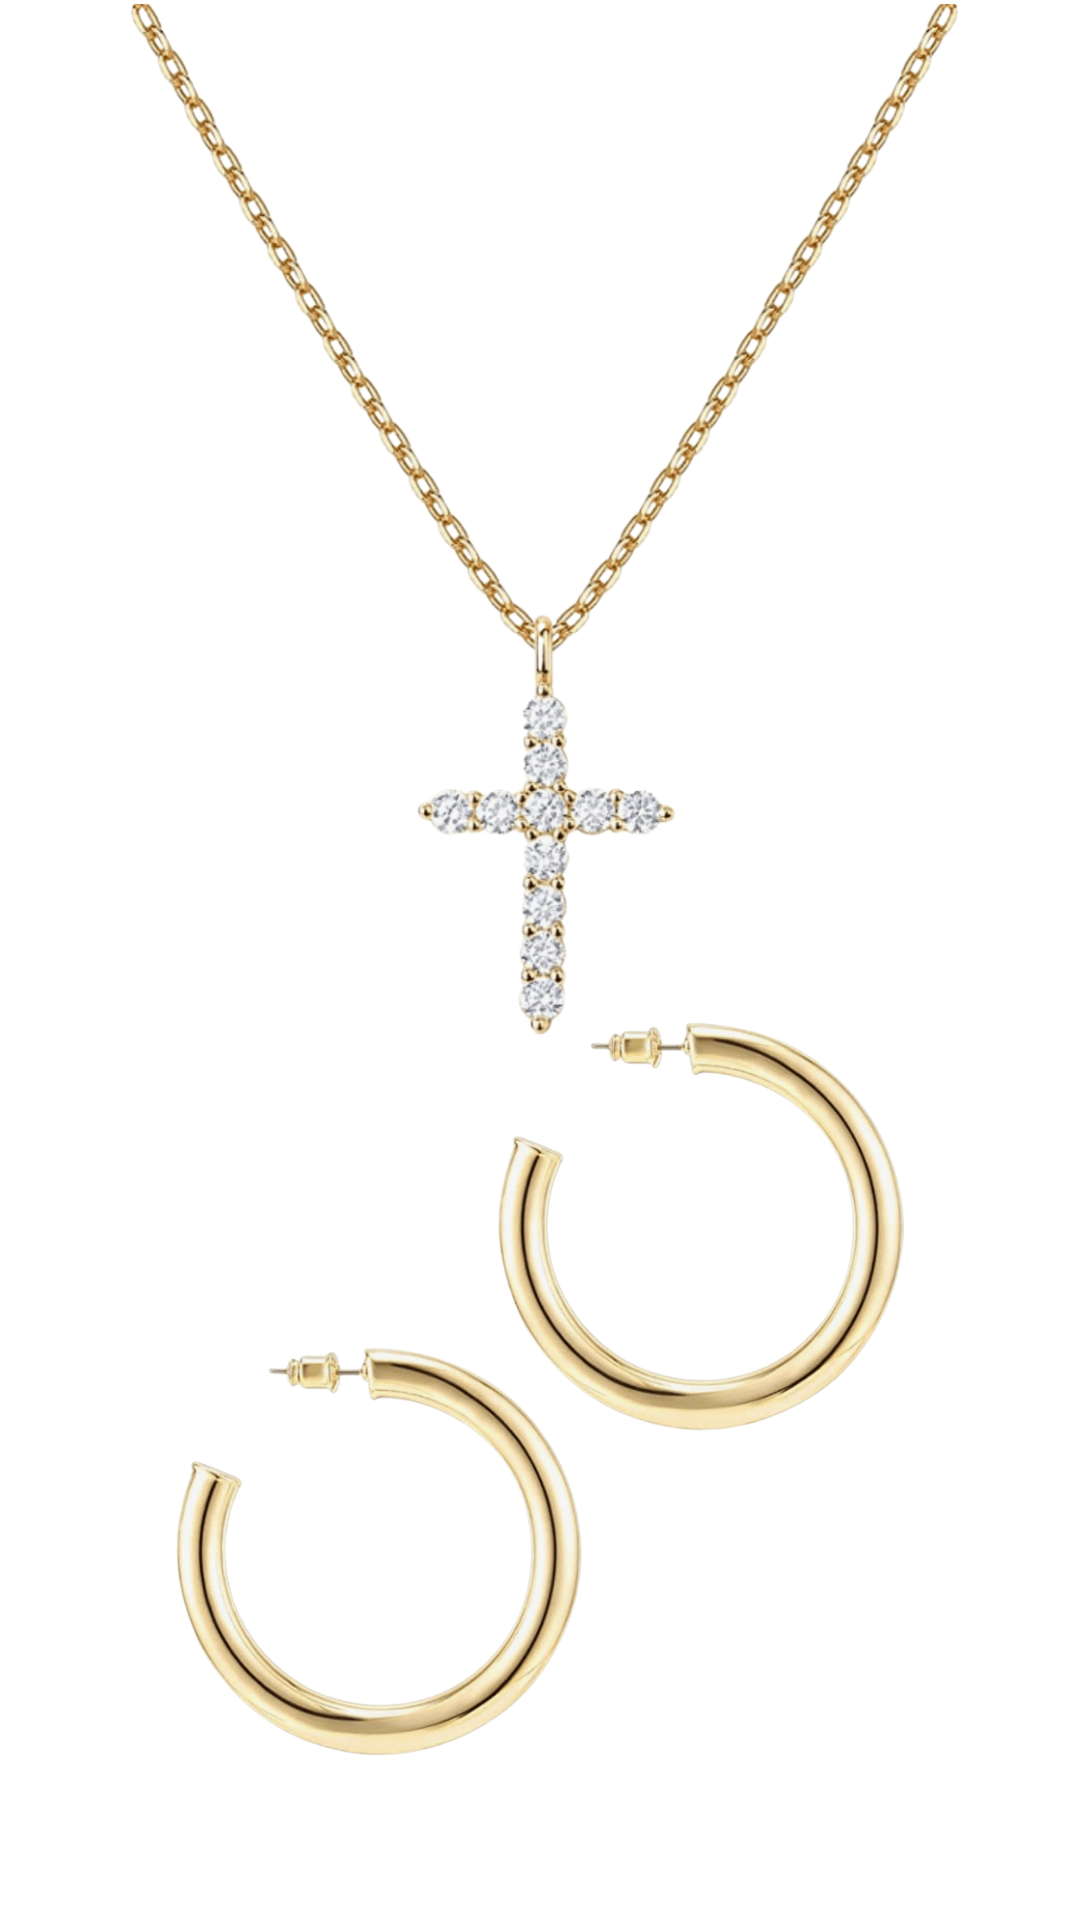 Gold & diamond dainty cross necklace on gold chain, gold hoop earrings